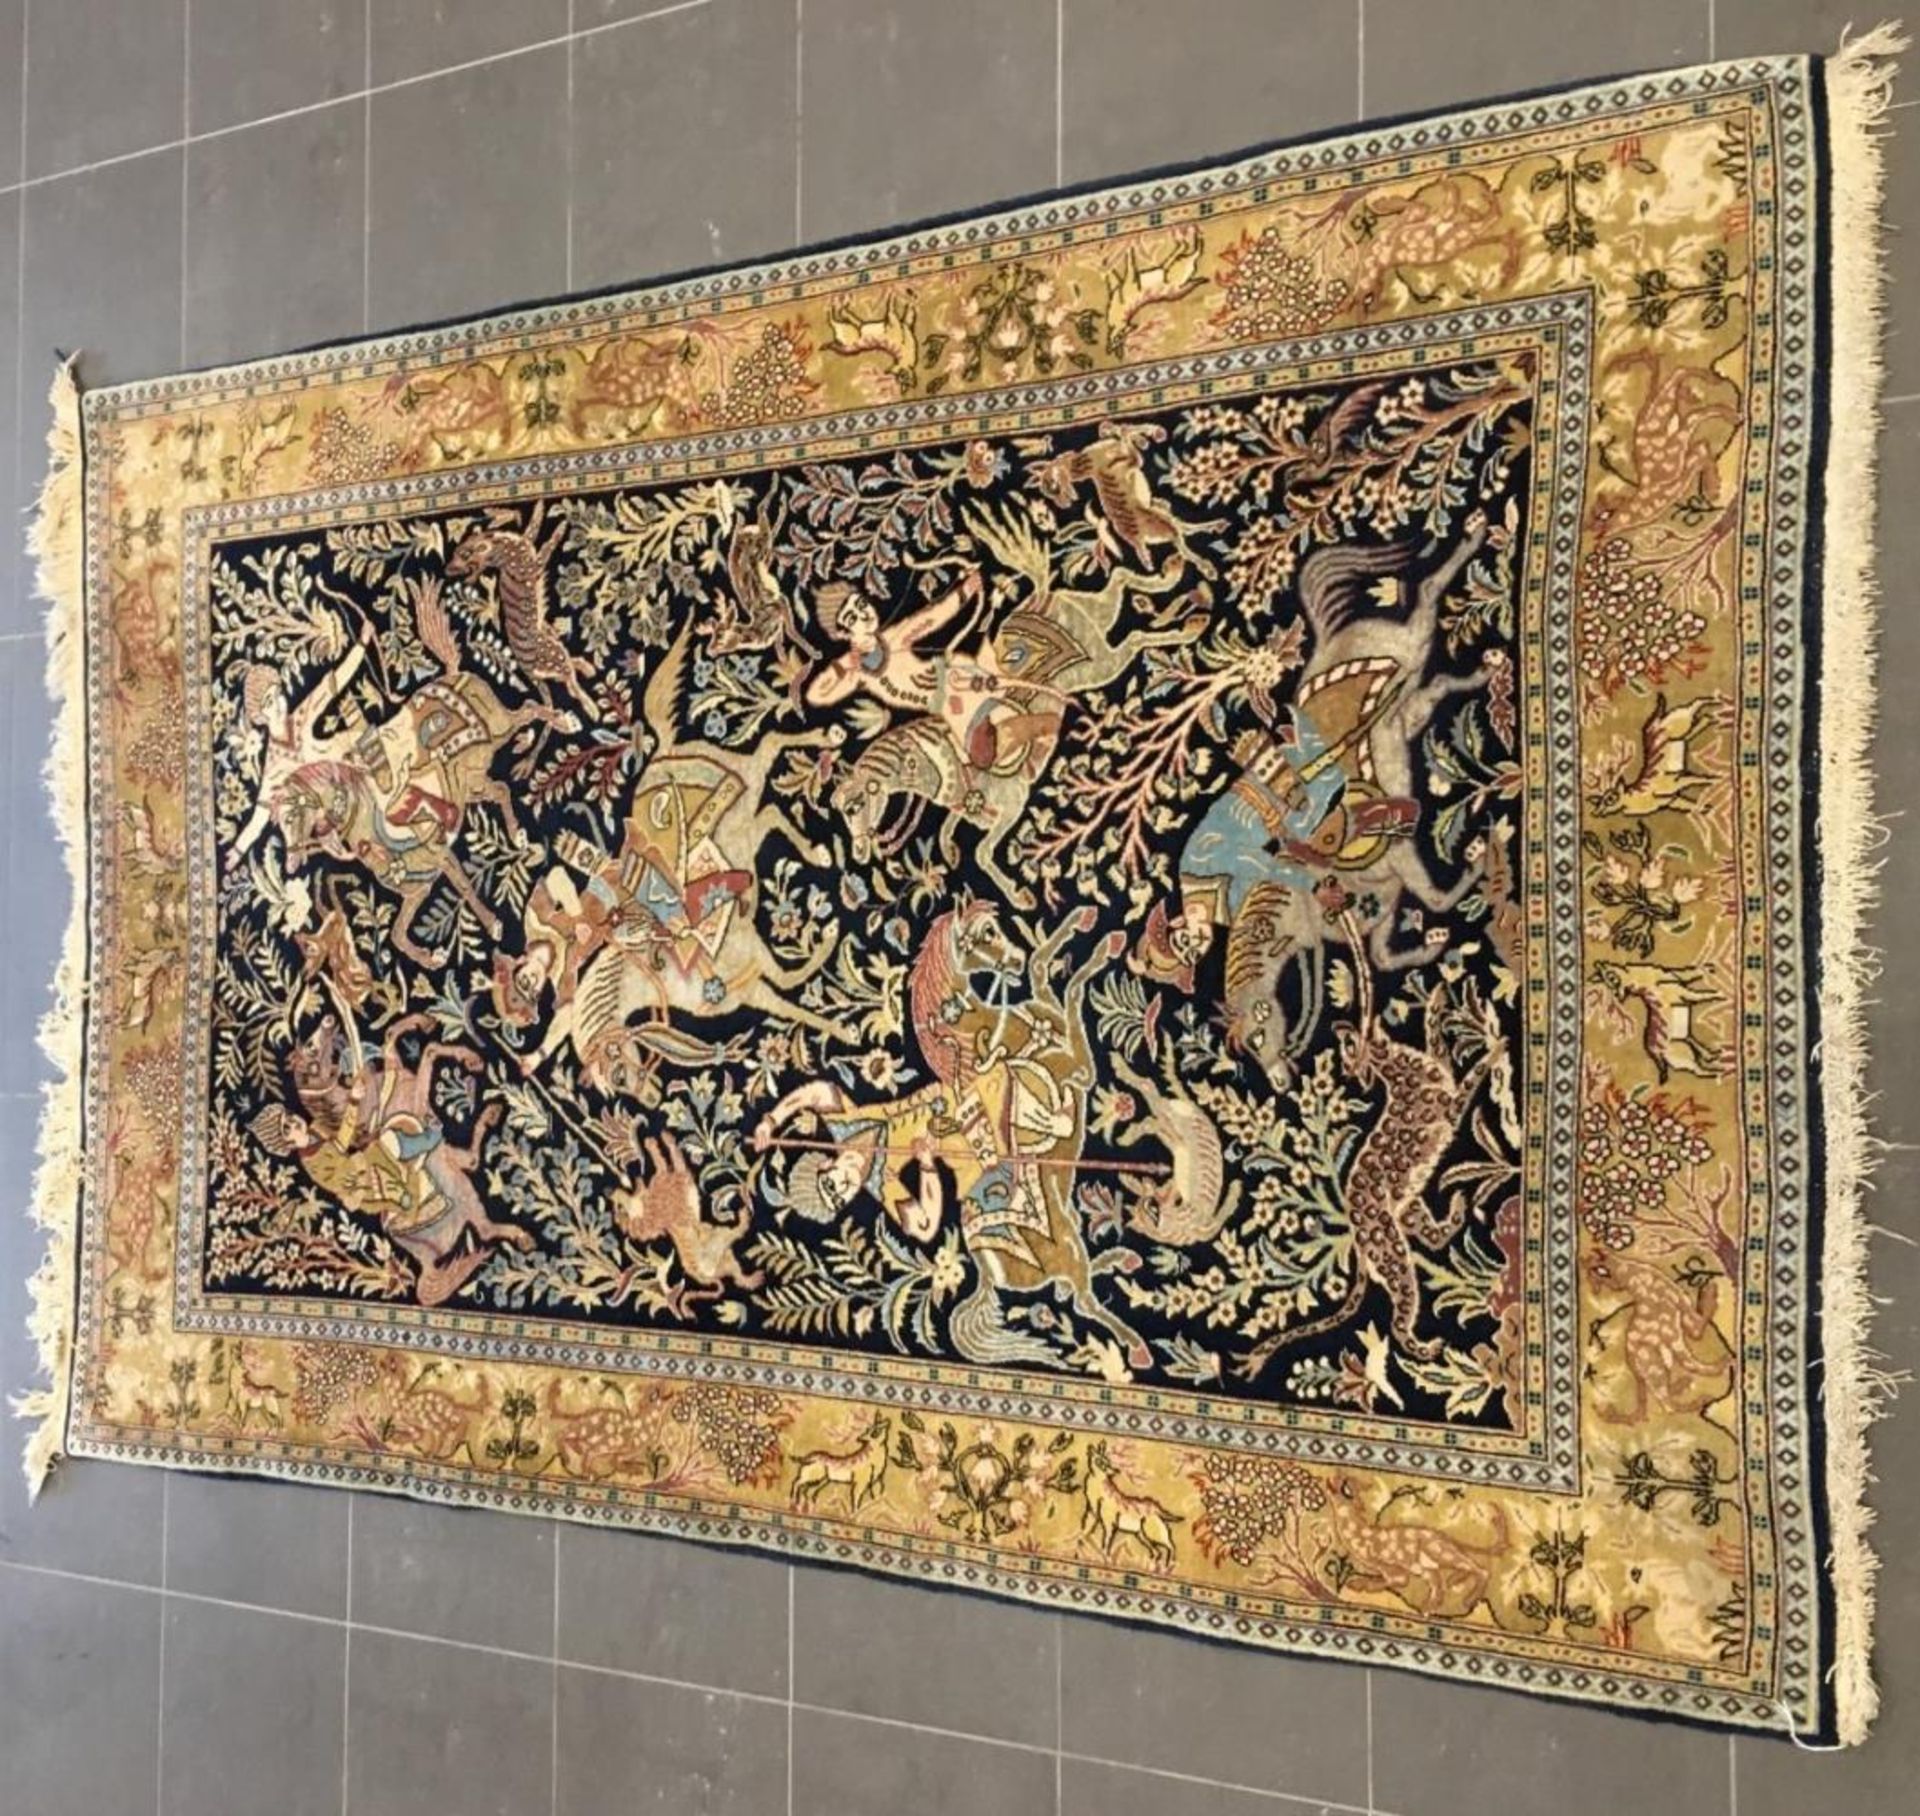 A Persian "Hamadan" rug with hunting scene, Iran, 20th century.